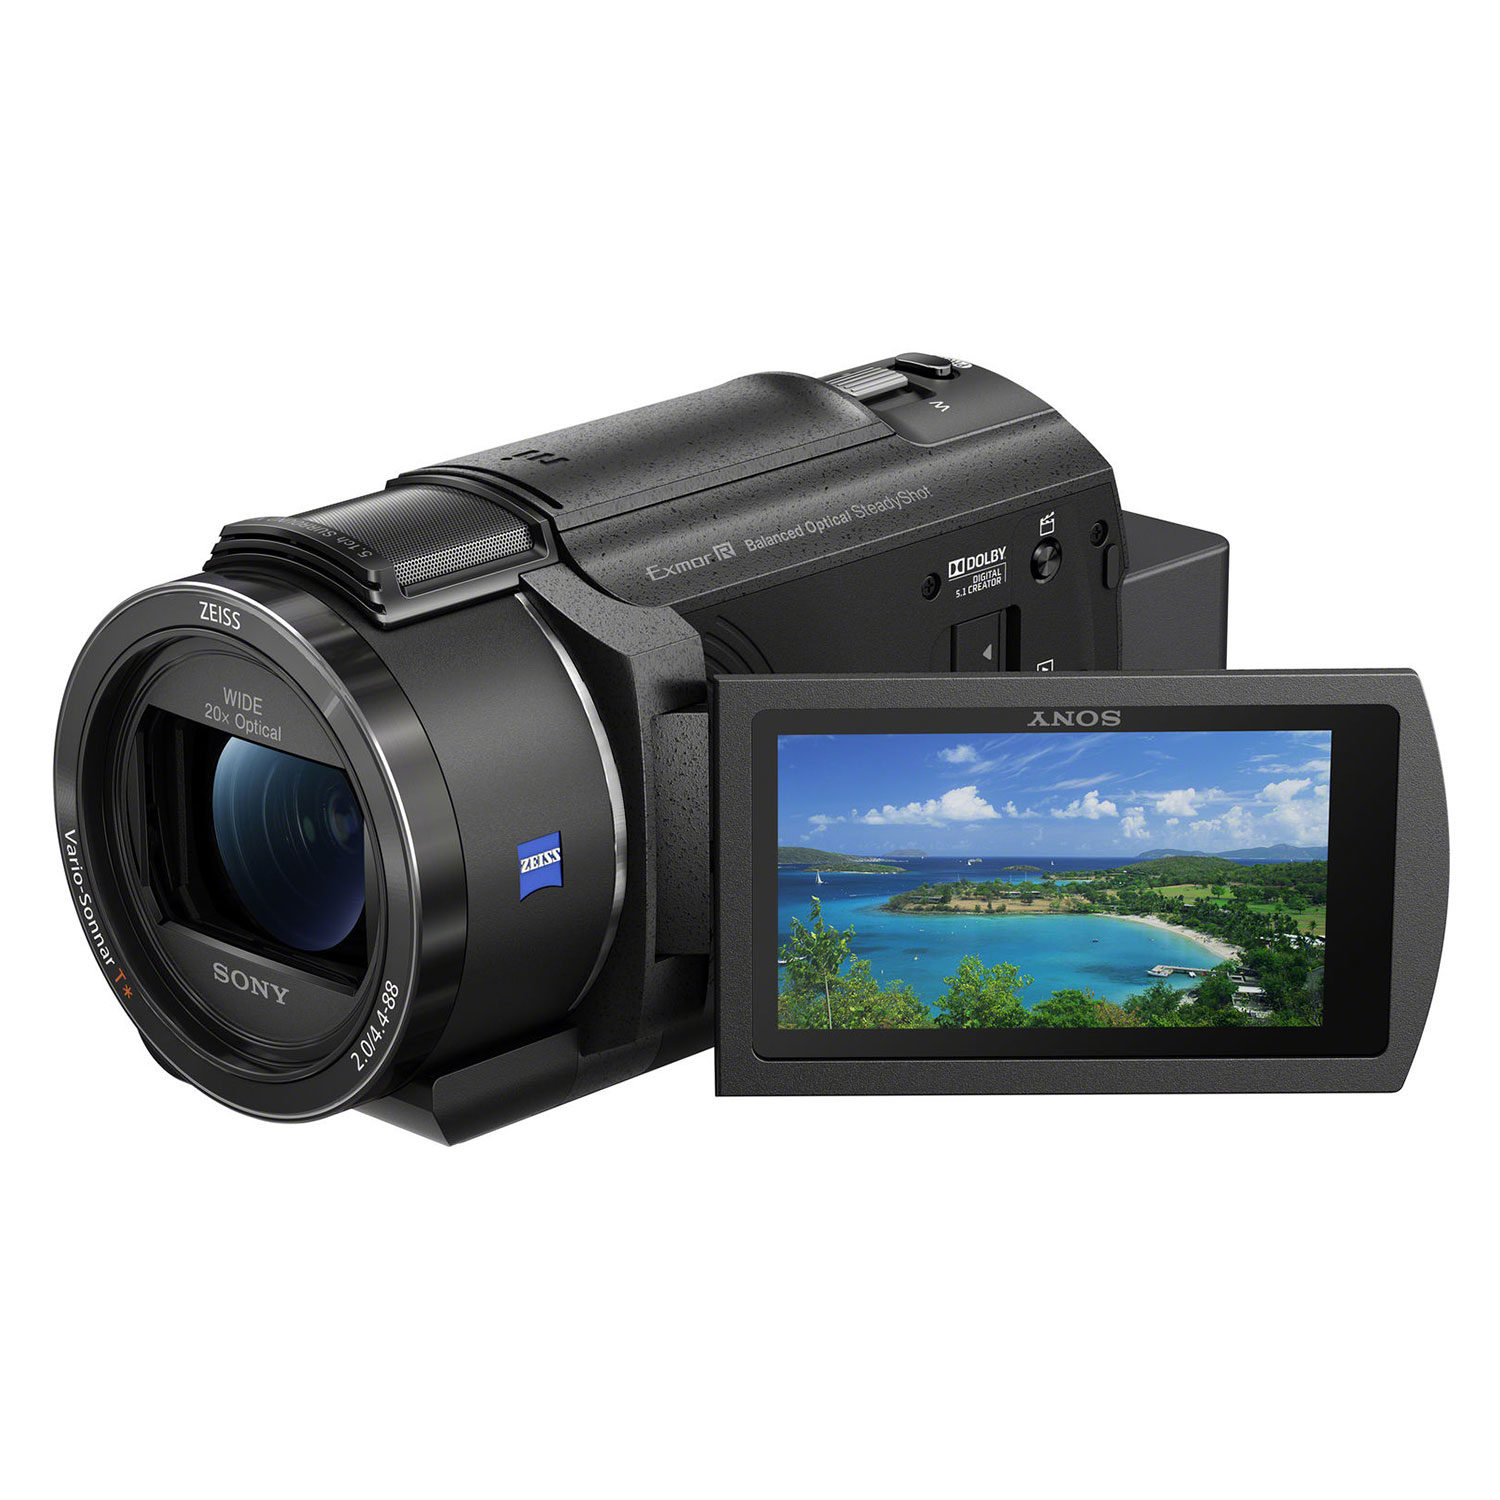 Sony FDR-AX43A 4K videocamera